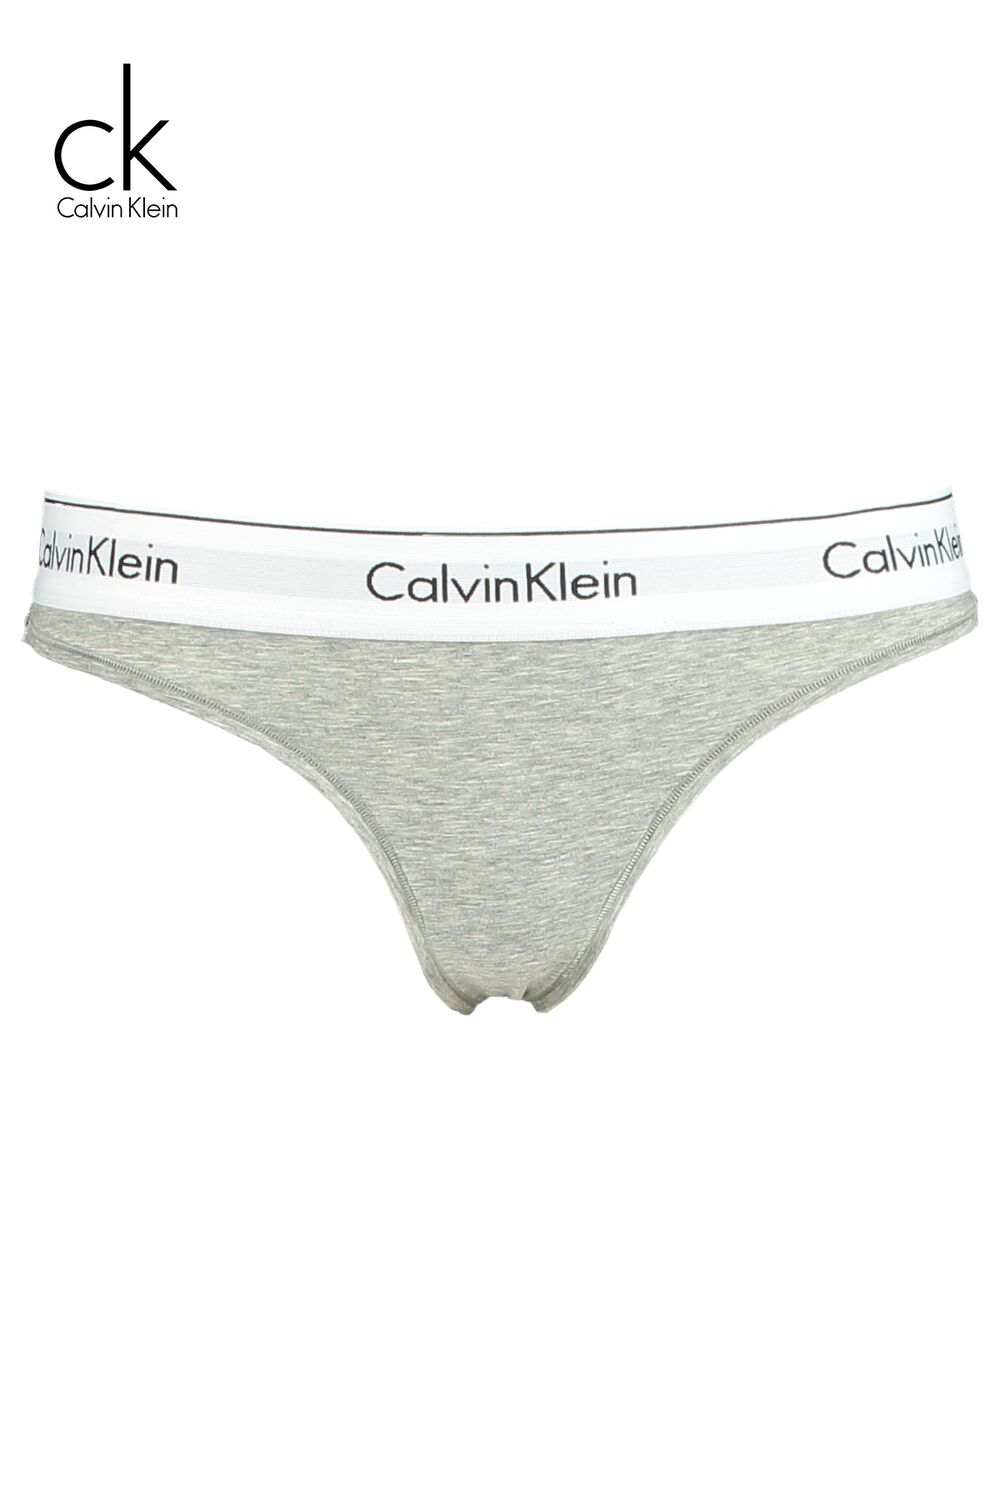 America Today Dames String Calvin Klein Grijs product